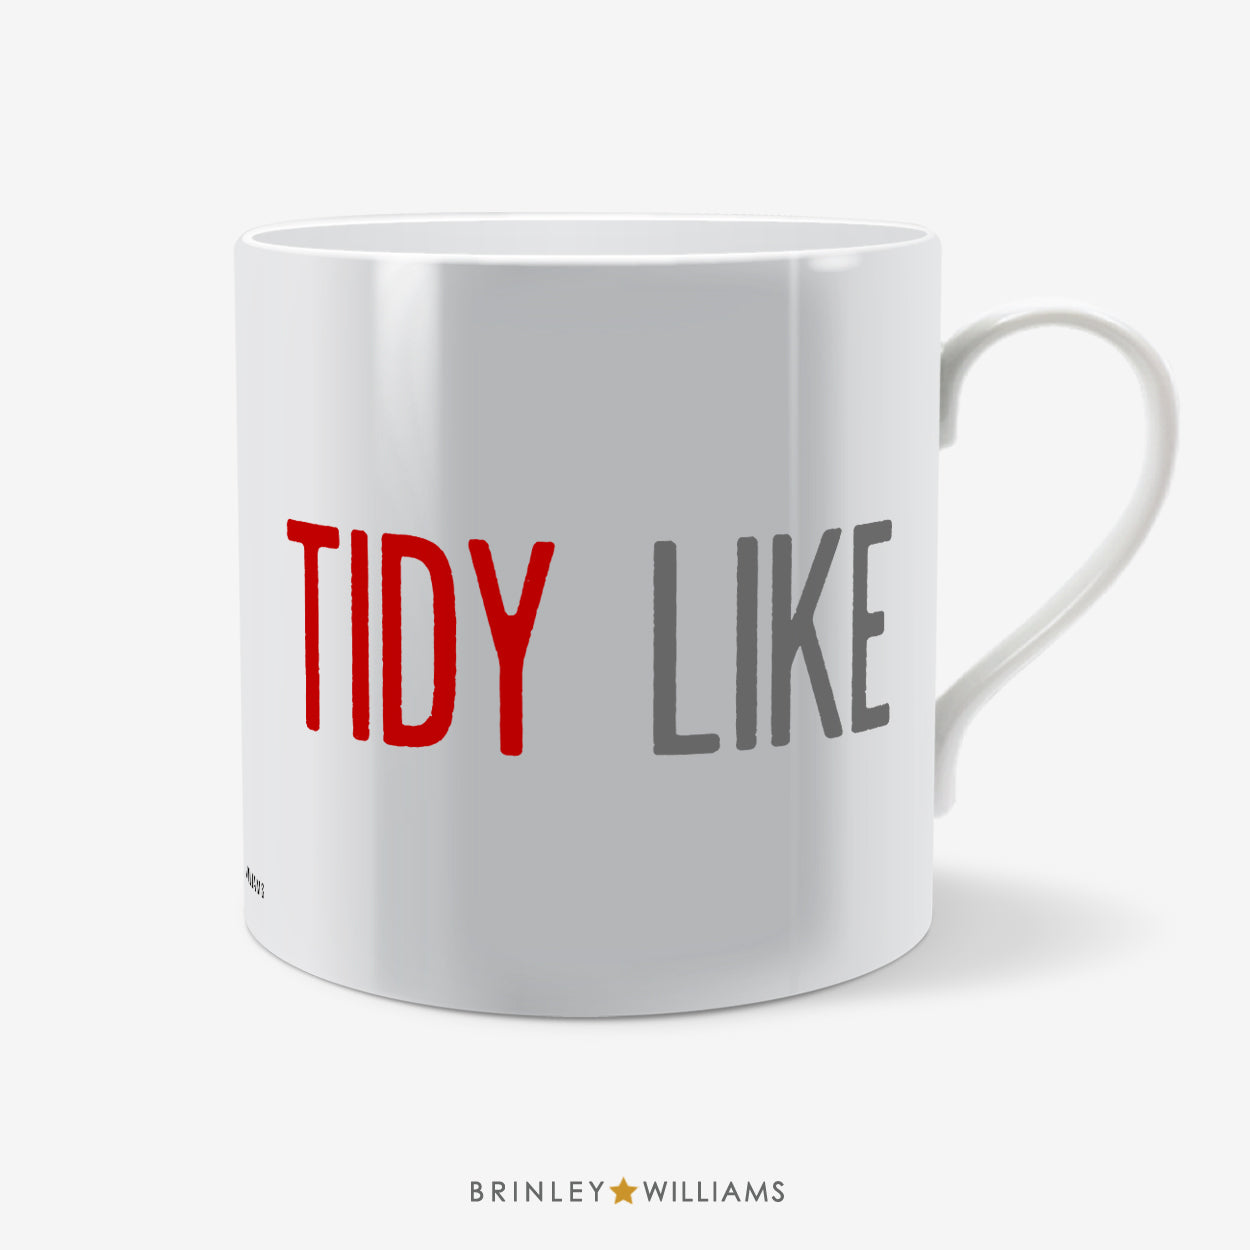 Tidy Like Welsh Mug - Red